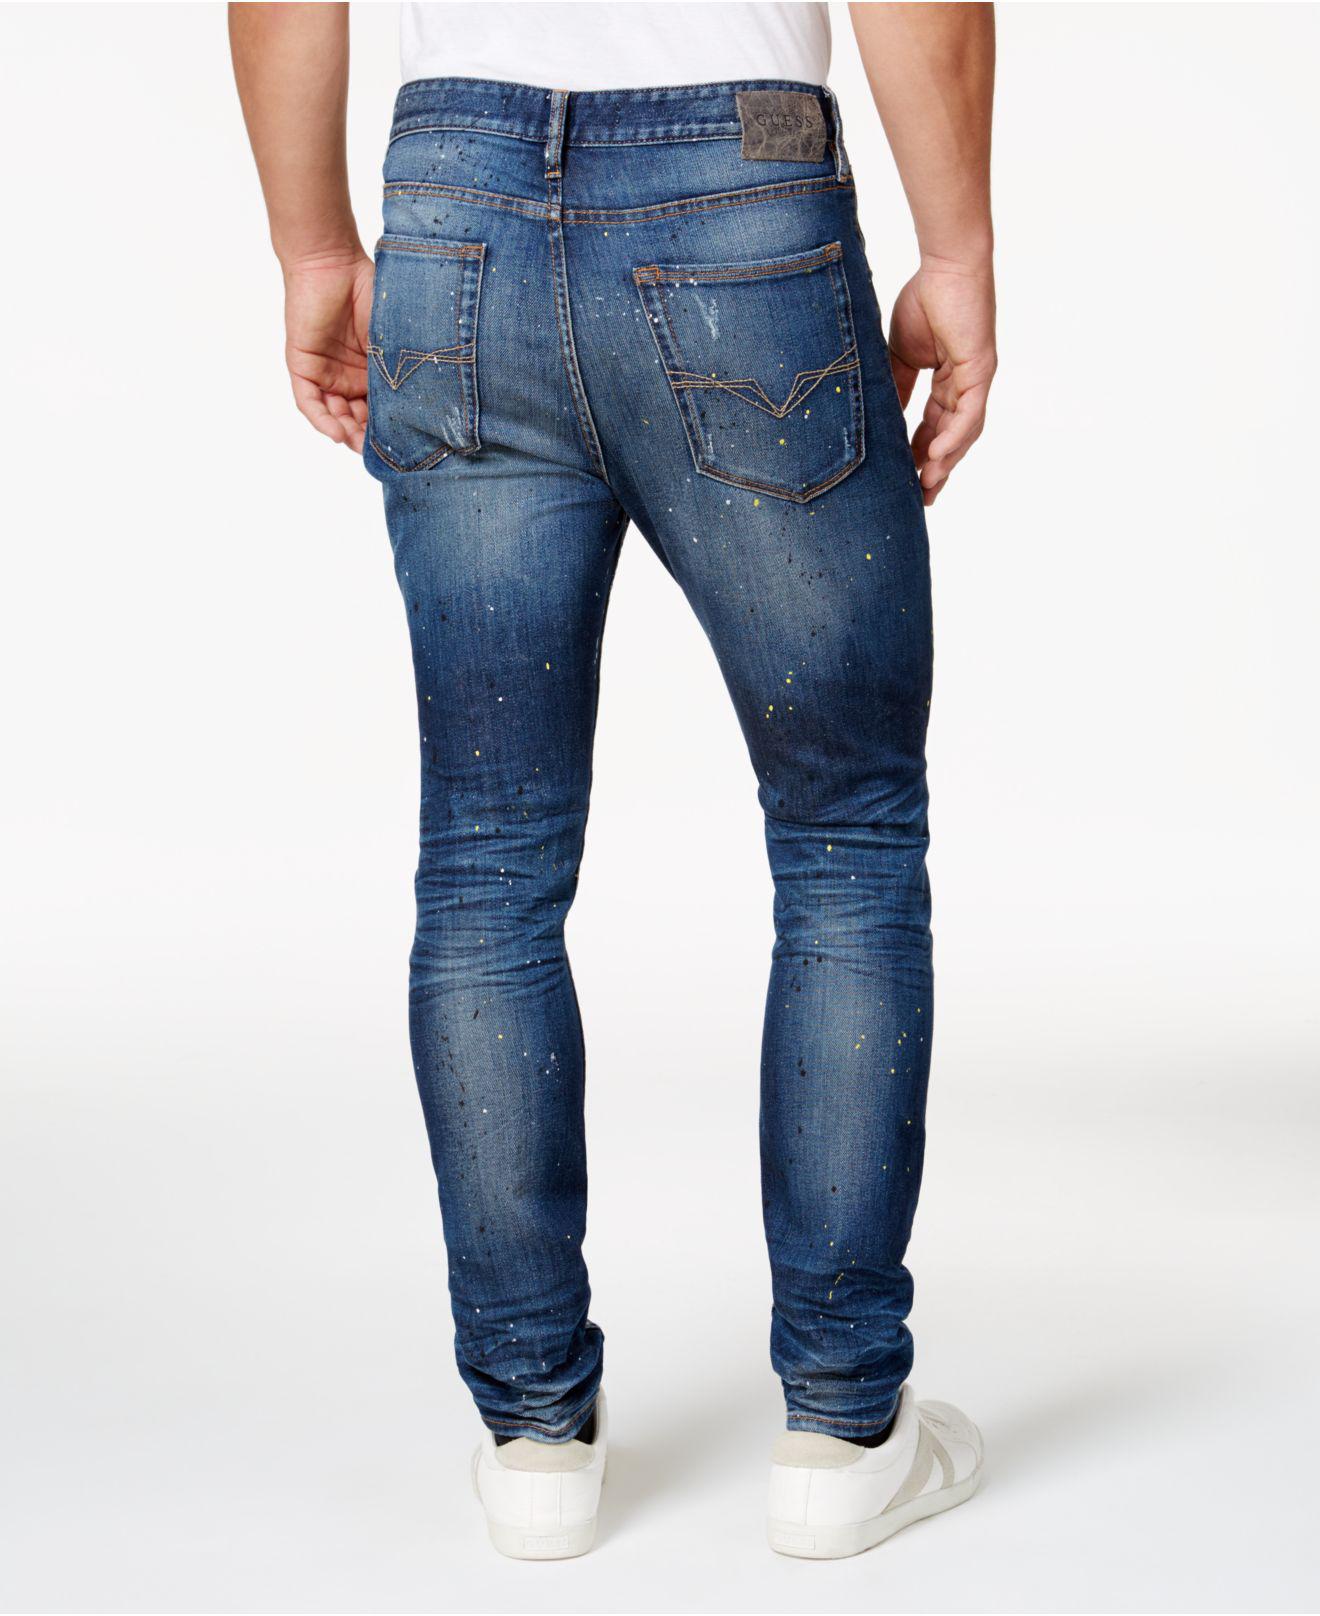 Guess Denim Men's Paint-splattered Ripped Jeans in Blue for Men - Lyst